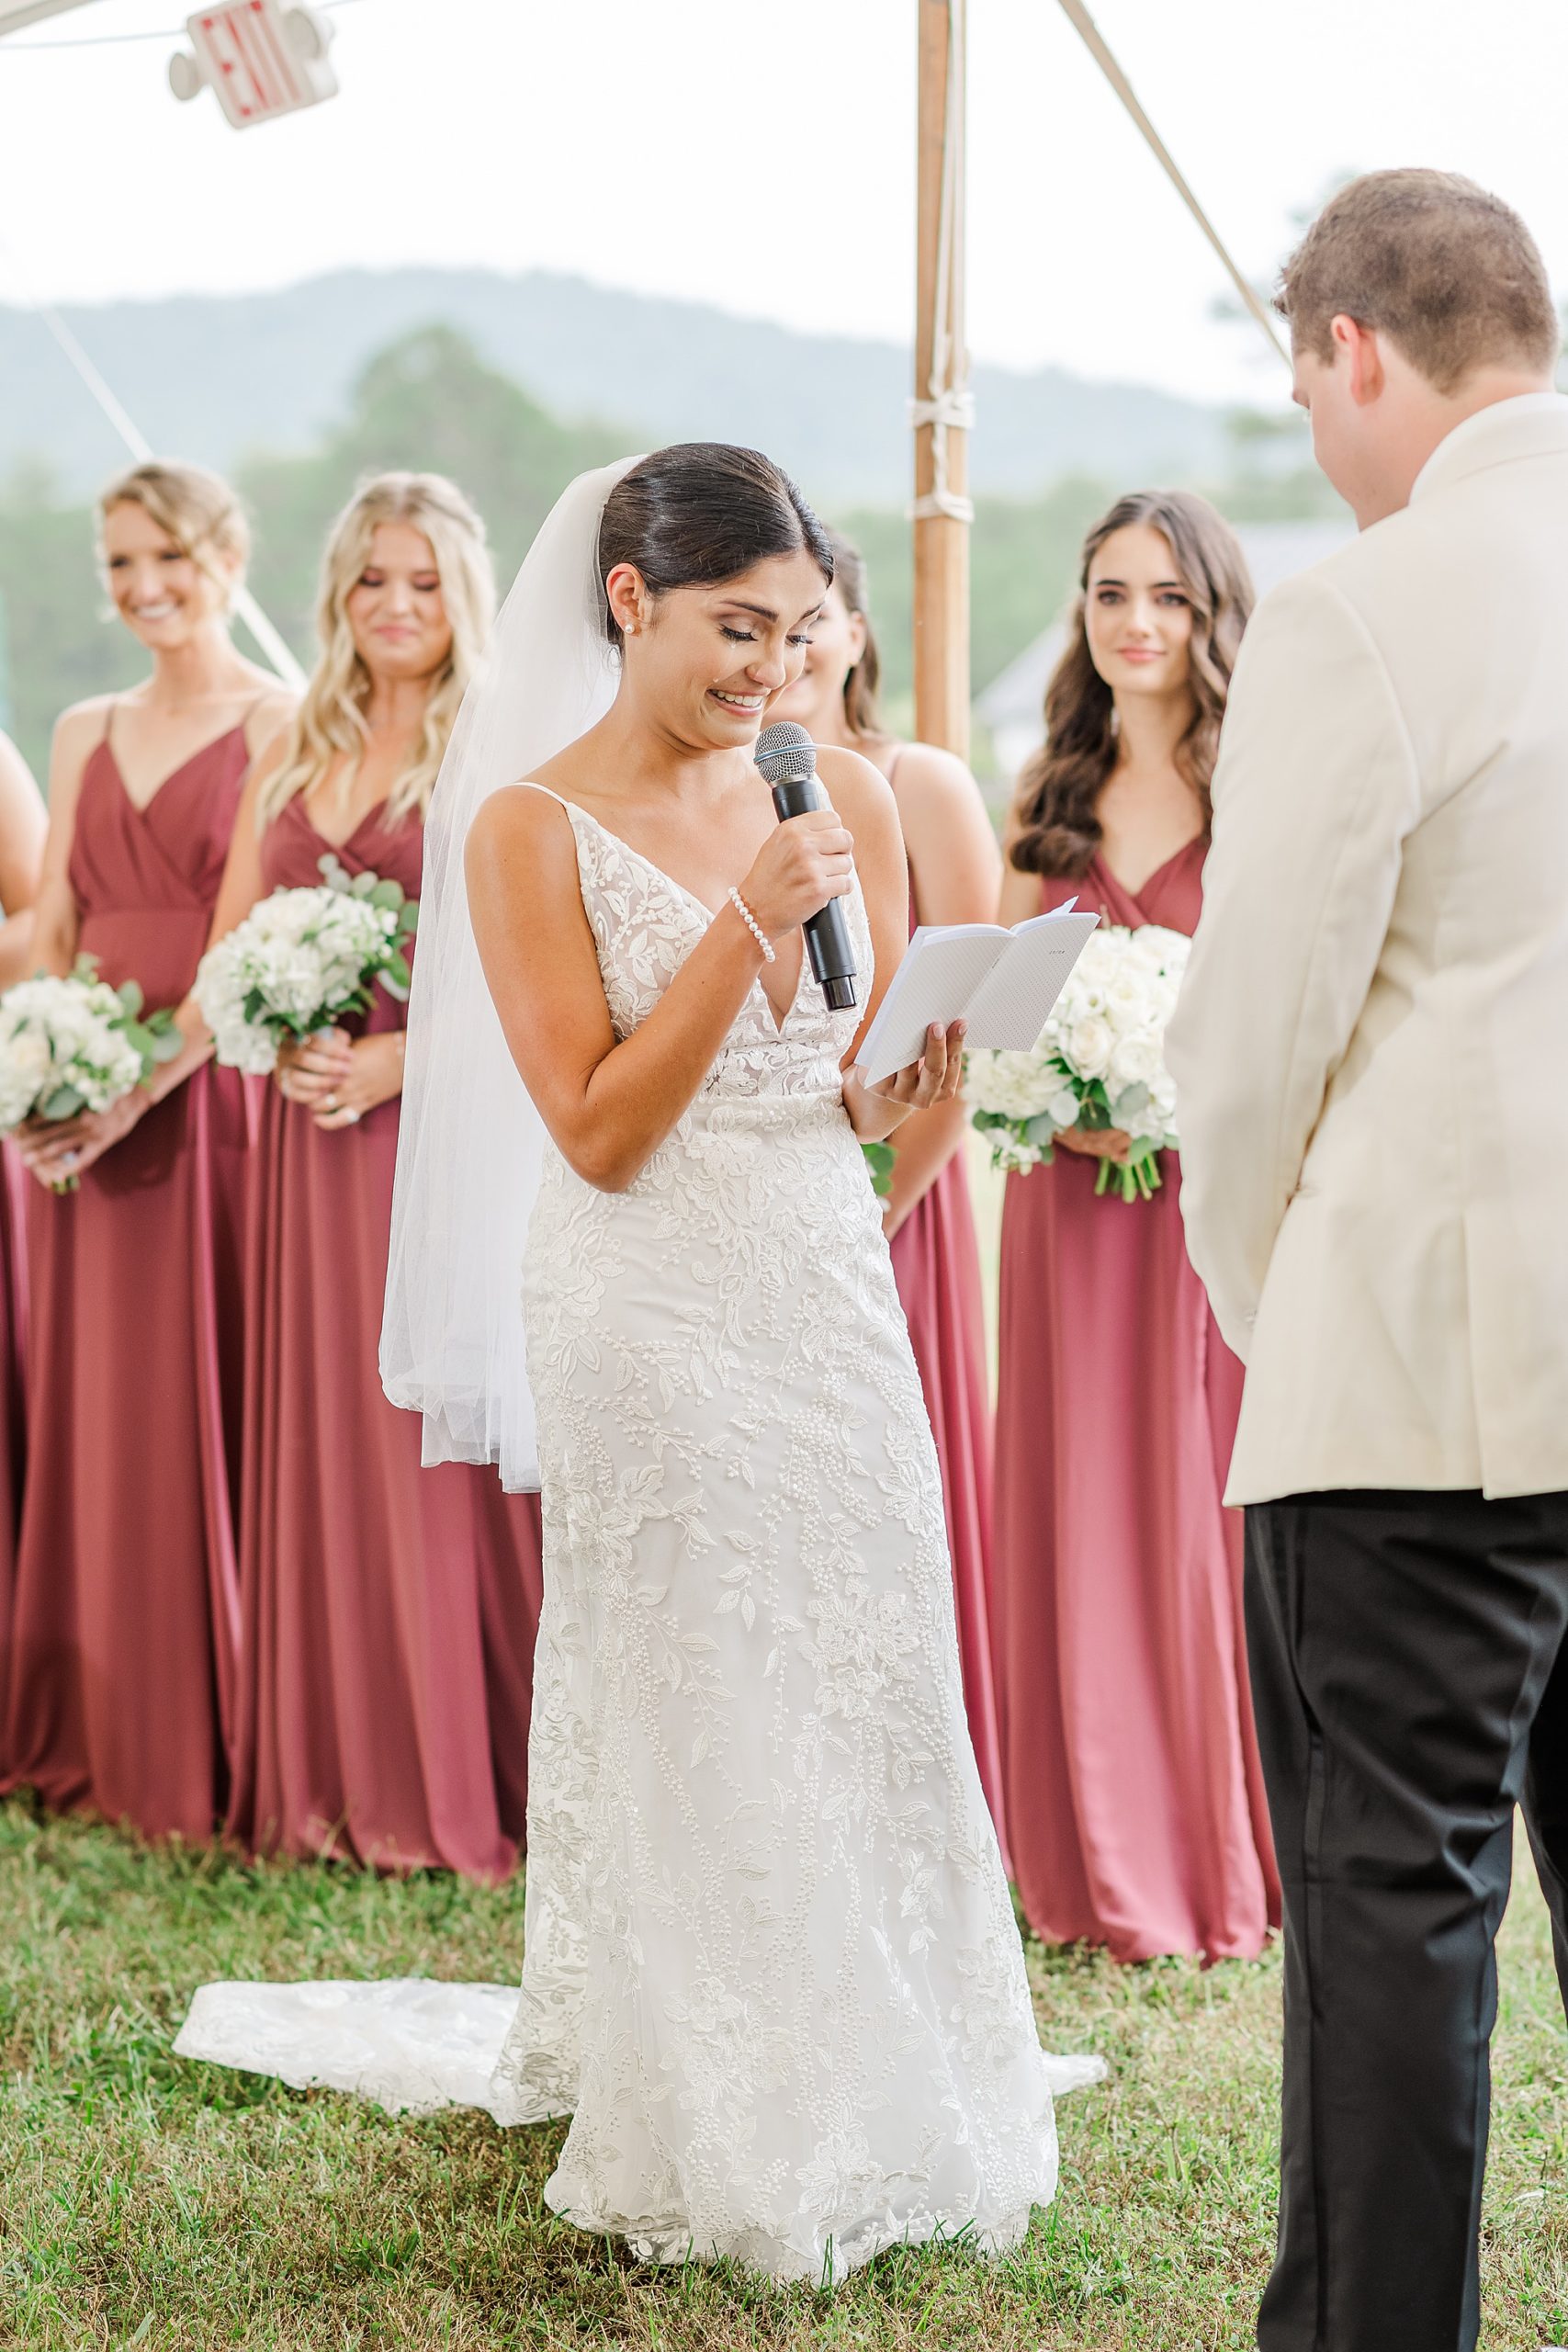 Outdoor Ceremony at Mount Fair Farm Wedding Photographed by Virginia Wedding Photographer Kailey Brianna Photographer